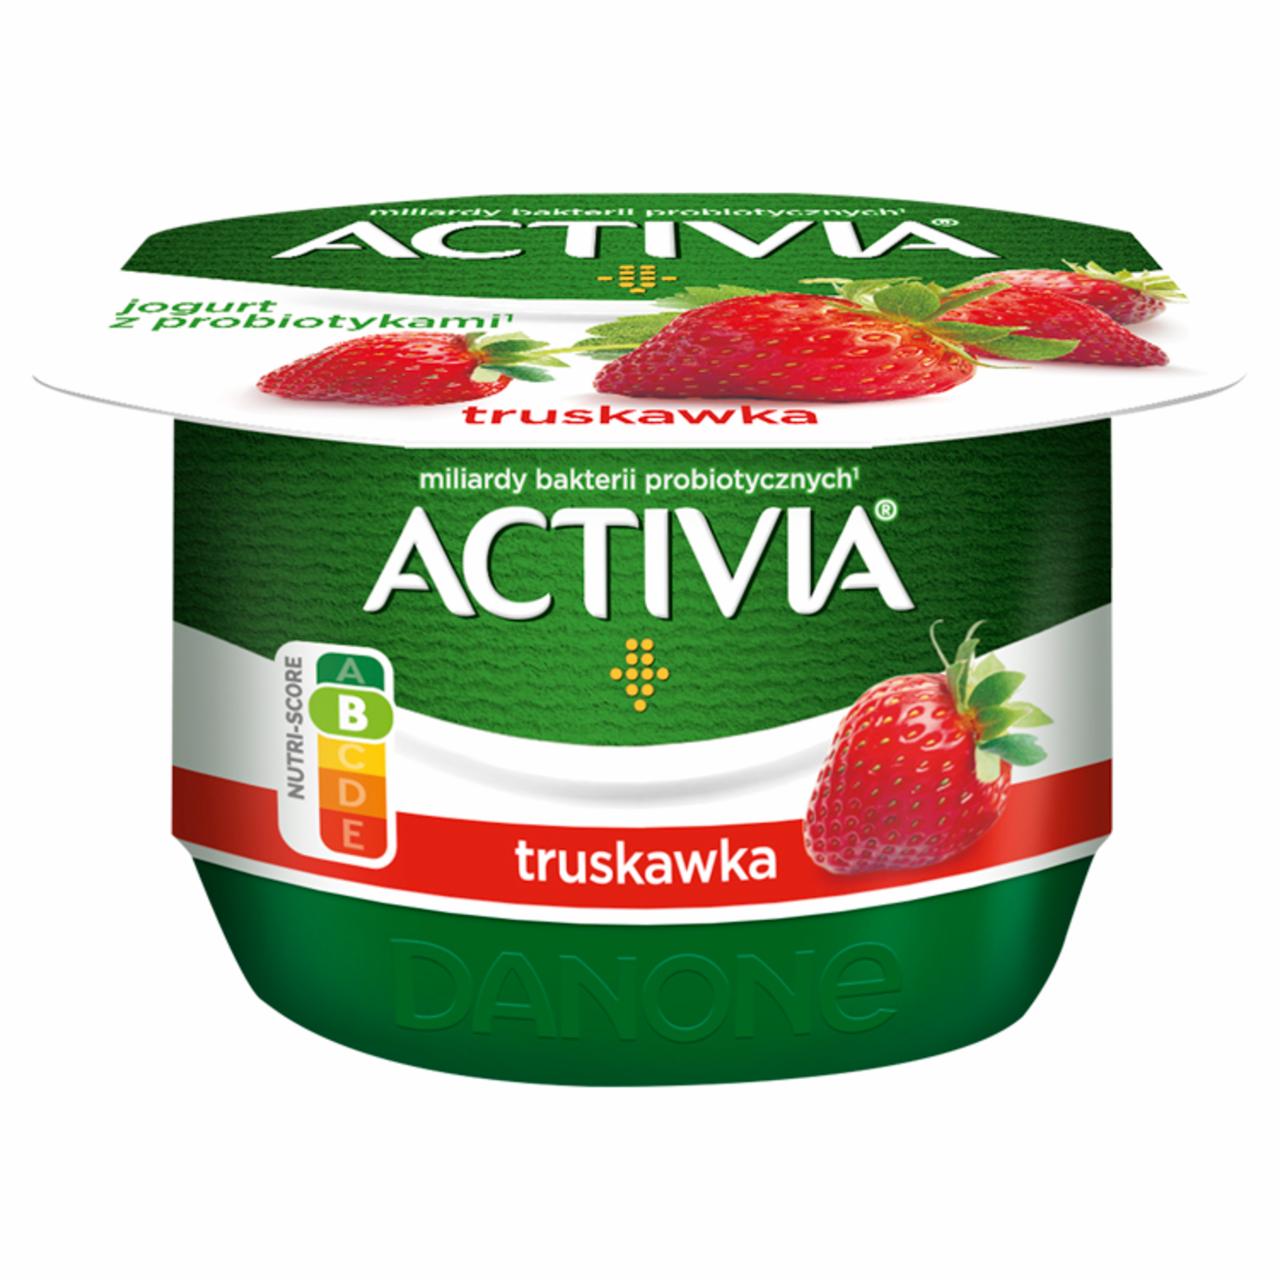 Zdjęcia - Activia Jogurt truskawka 120 g